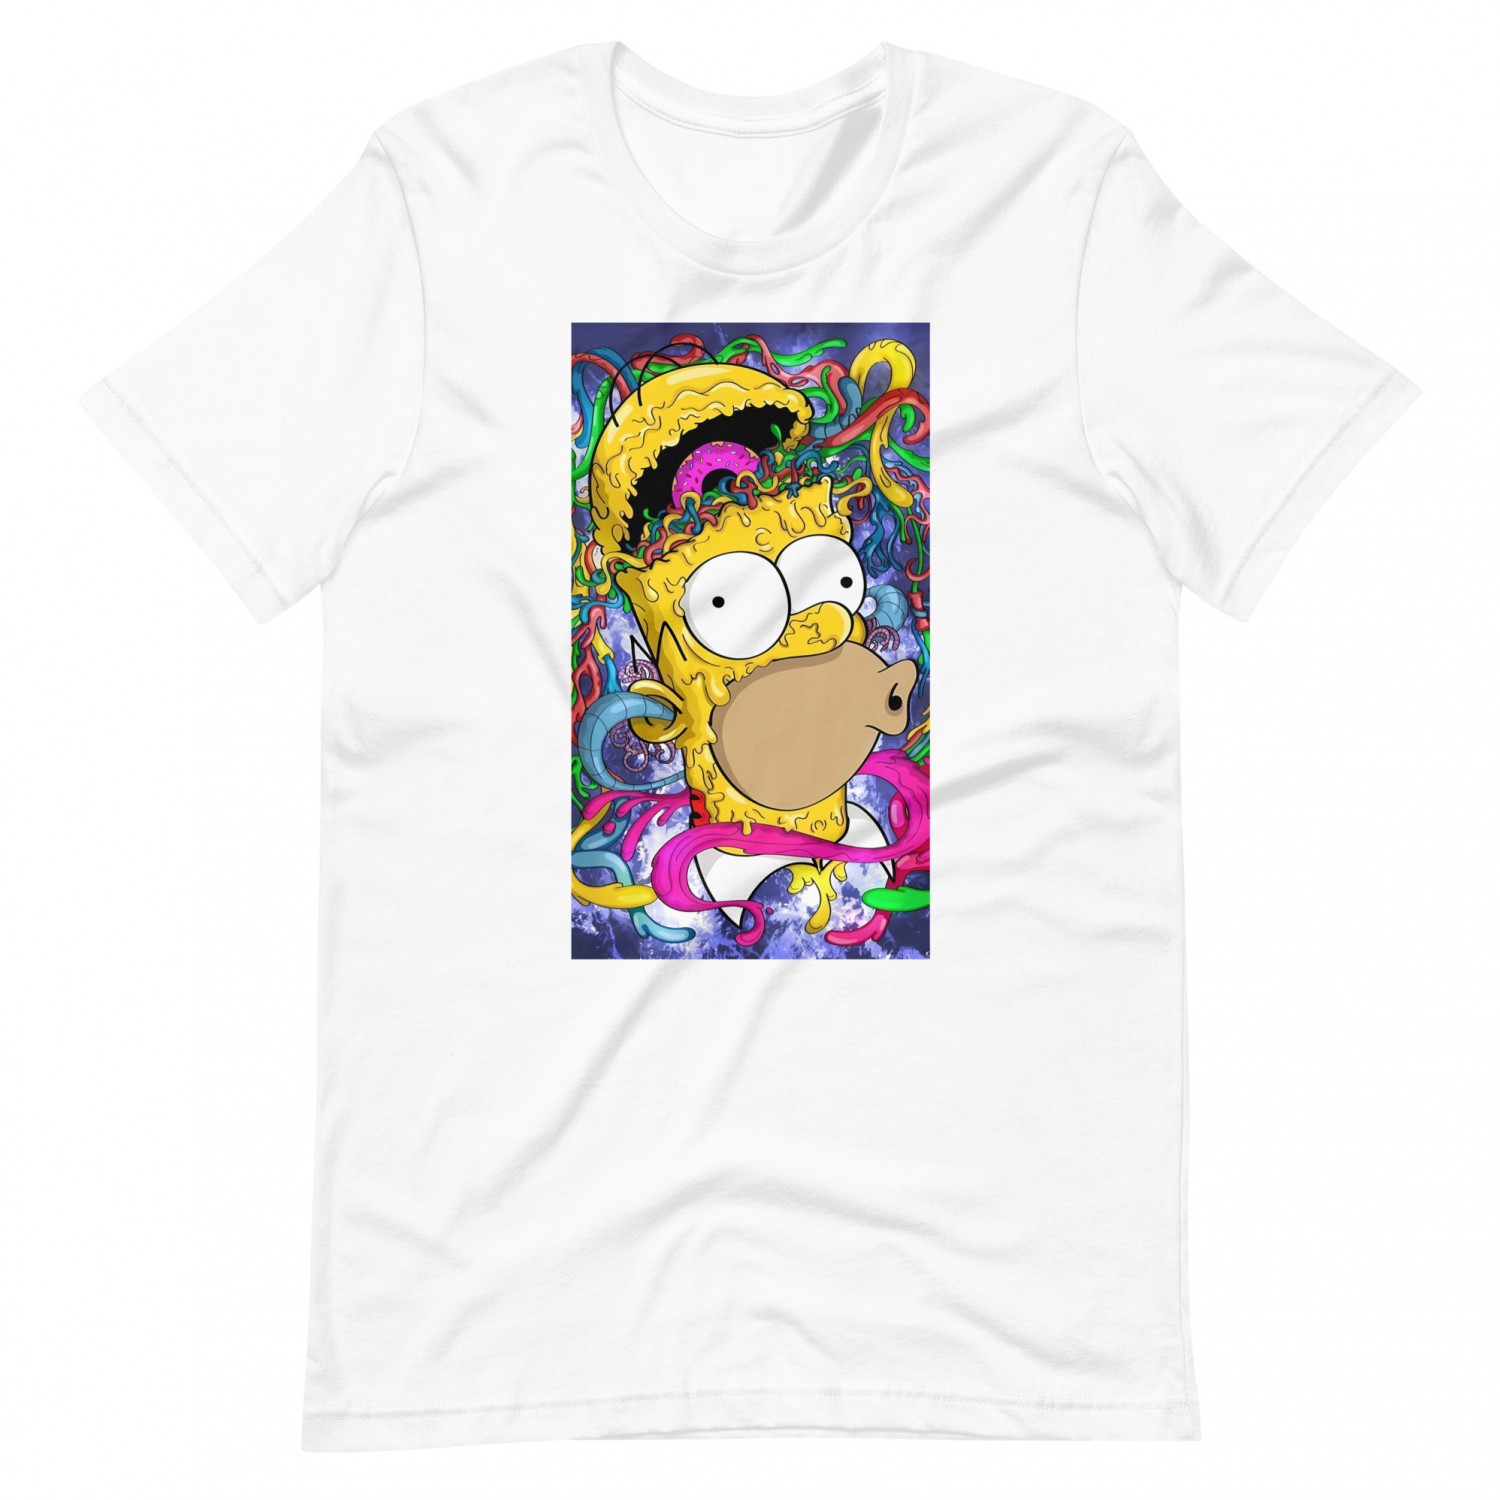 Kup koszulkę z nadrukiem Simpsonów